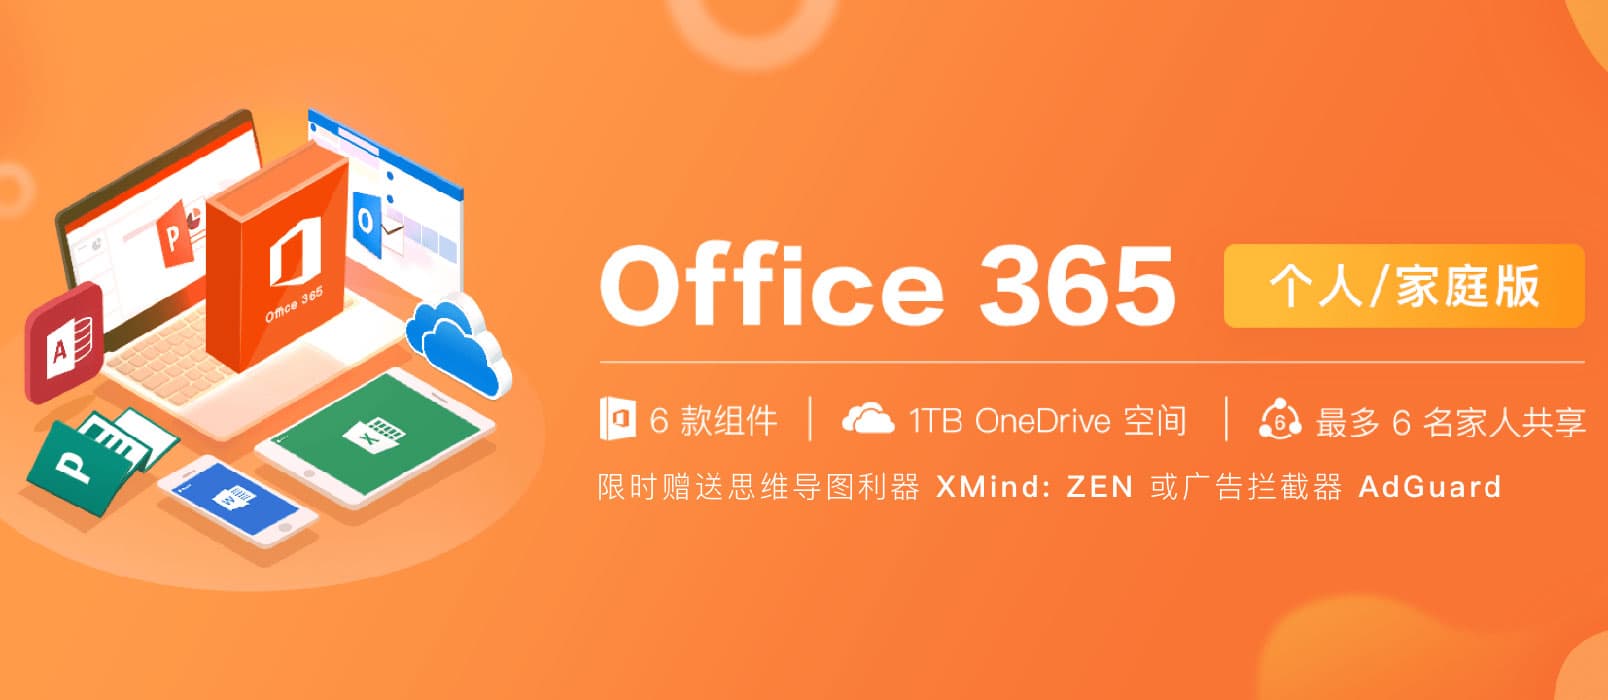 Office 365 个人/家庭版 5+ 折 特价，立即拥有正版 Word/Excel/PPT/Outlook 1